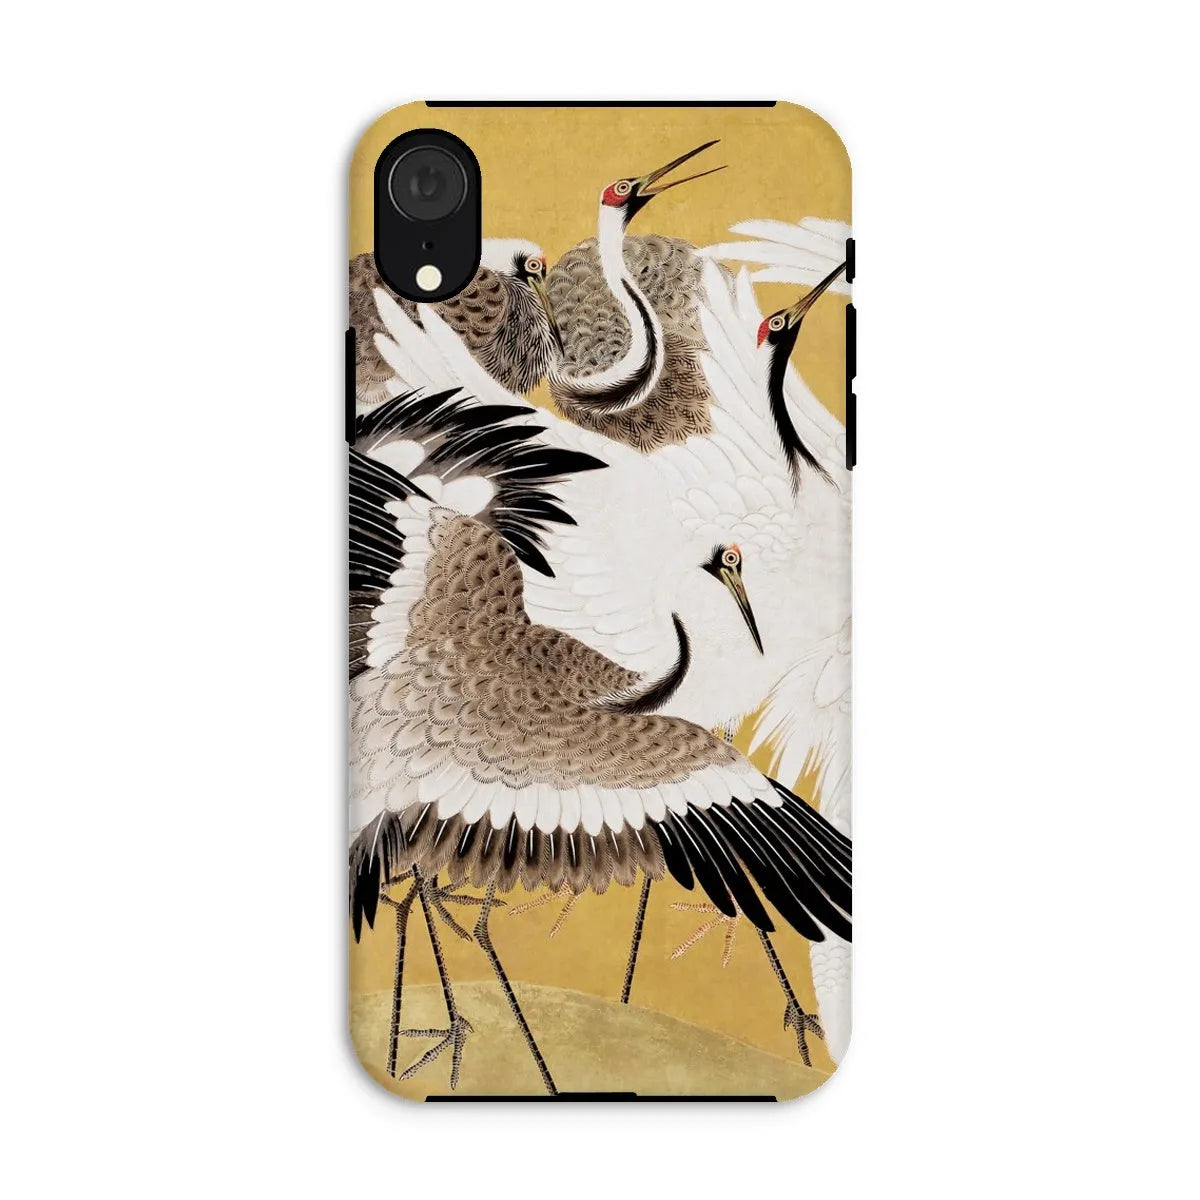 Flock Of Cranes Japanese Bird Art Phone Case - Ishida Yūtei - Iphone Xr / Matte - Mobile Phone Cases - Aesthetic Art